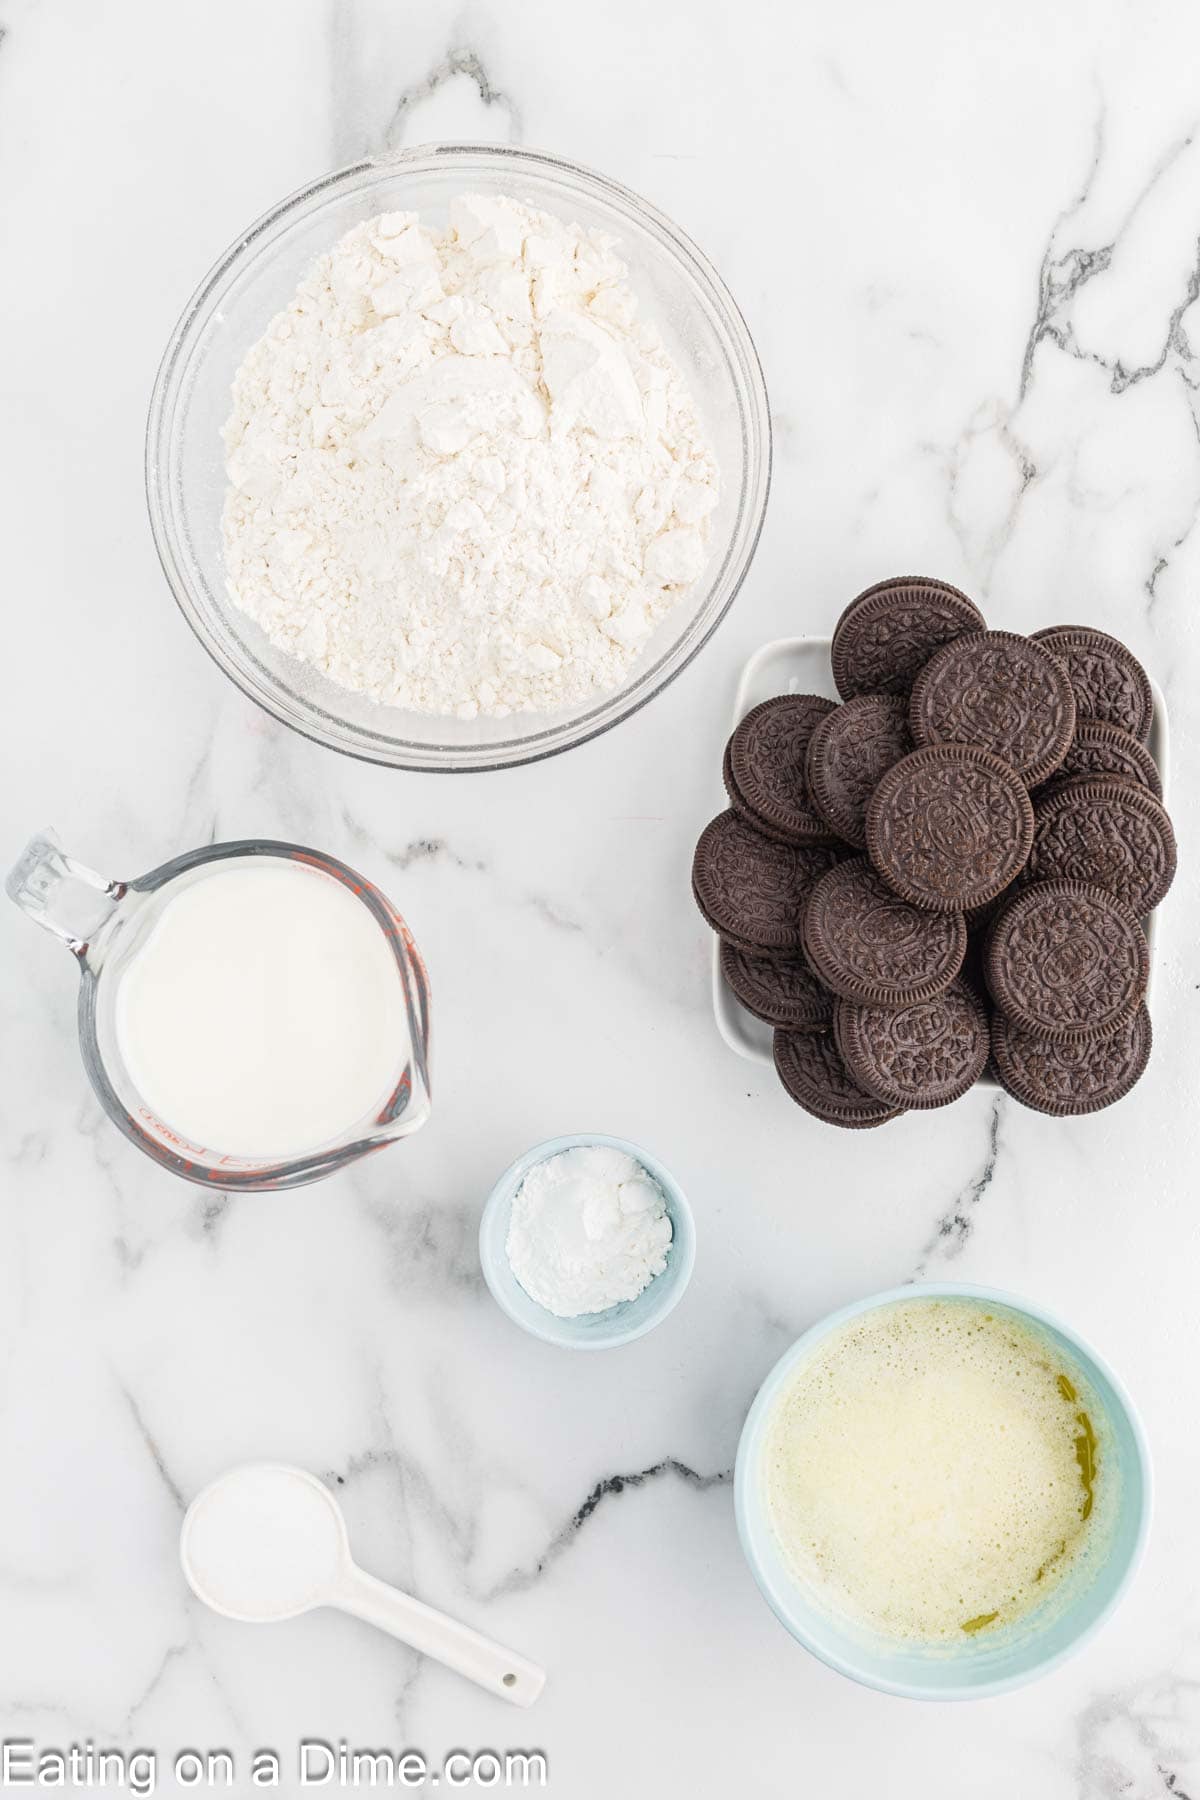 Ingredients - Flour, baking powder, sugar, milk, butter, Oreos